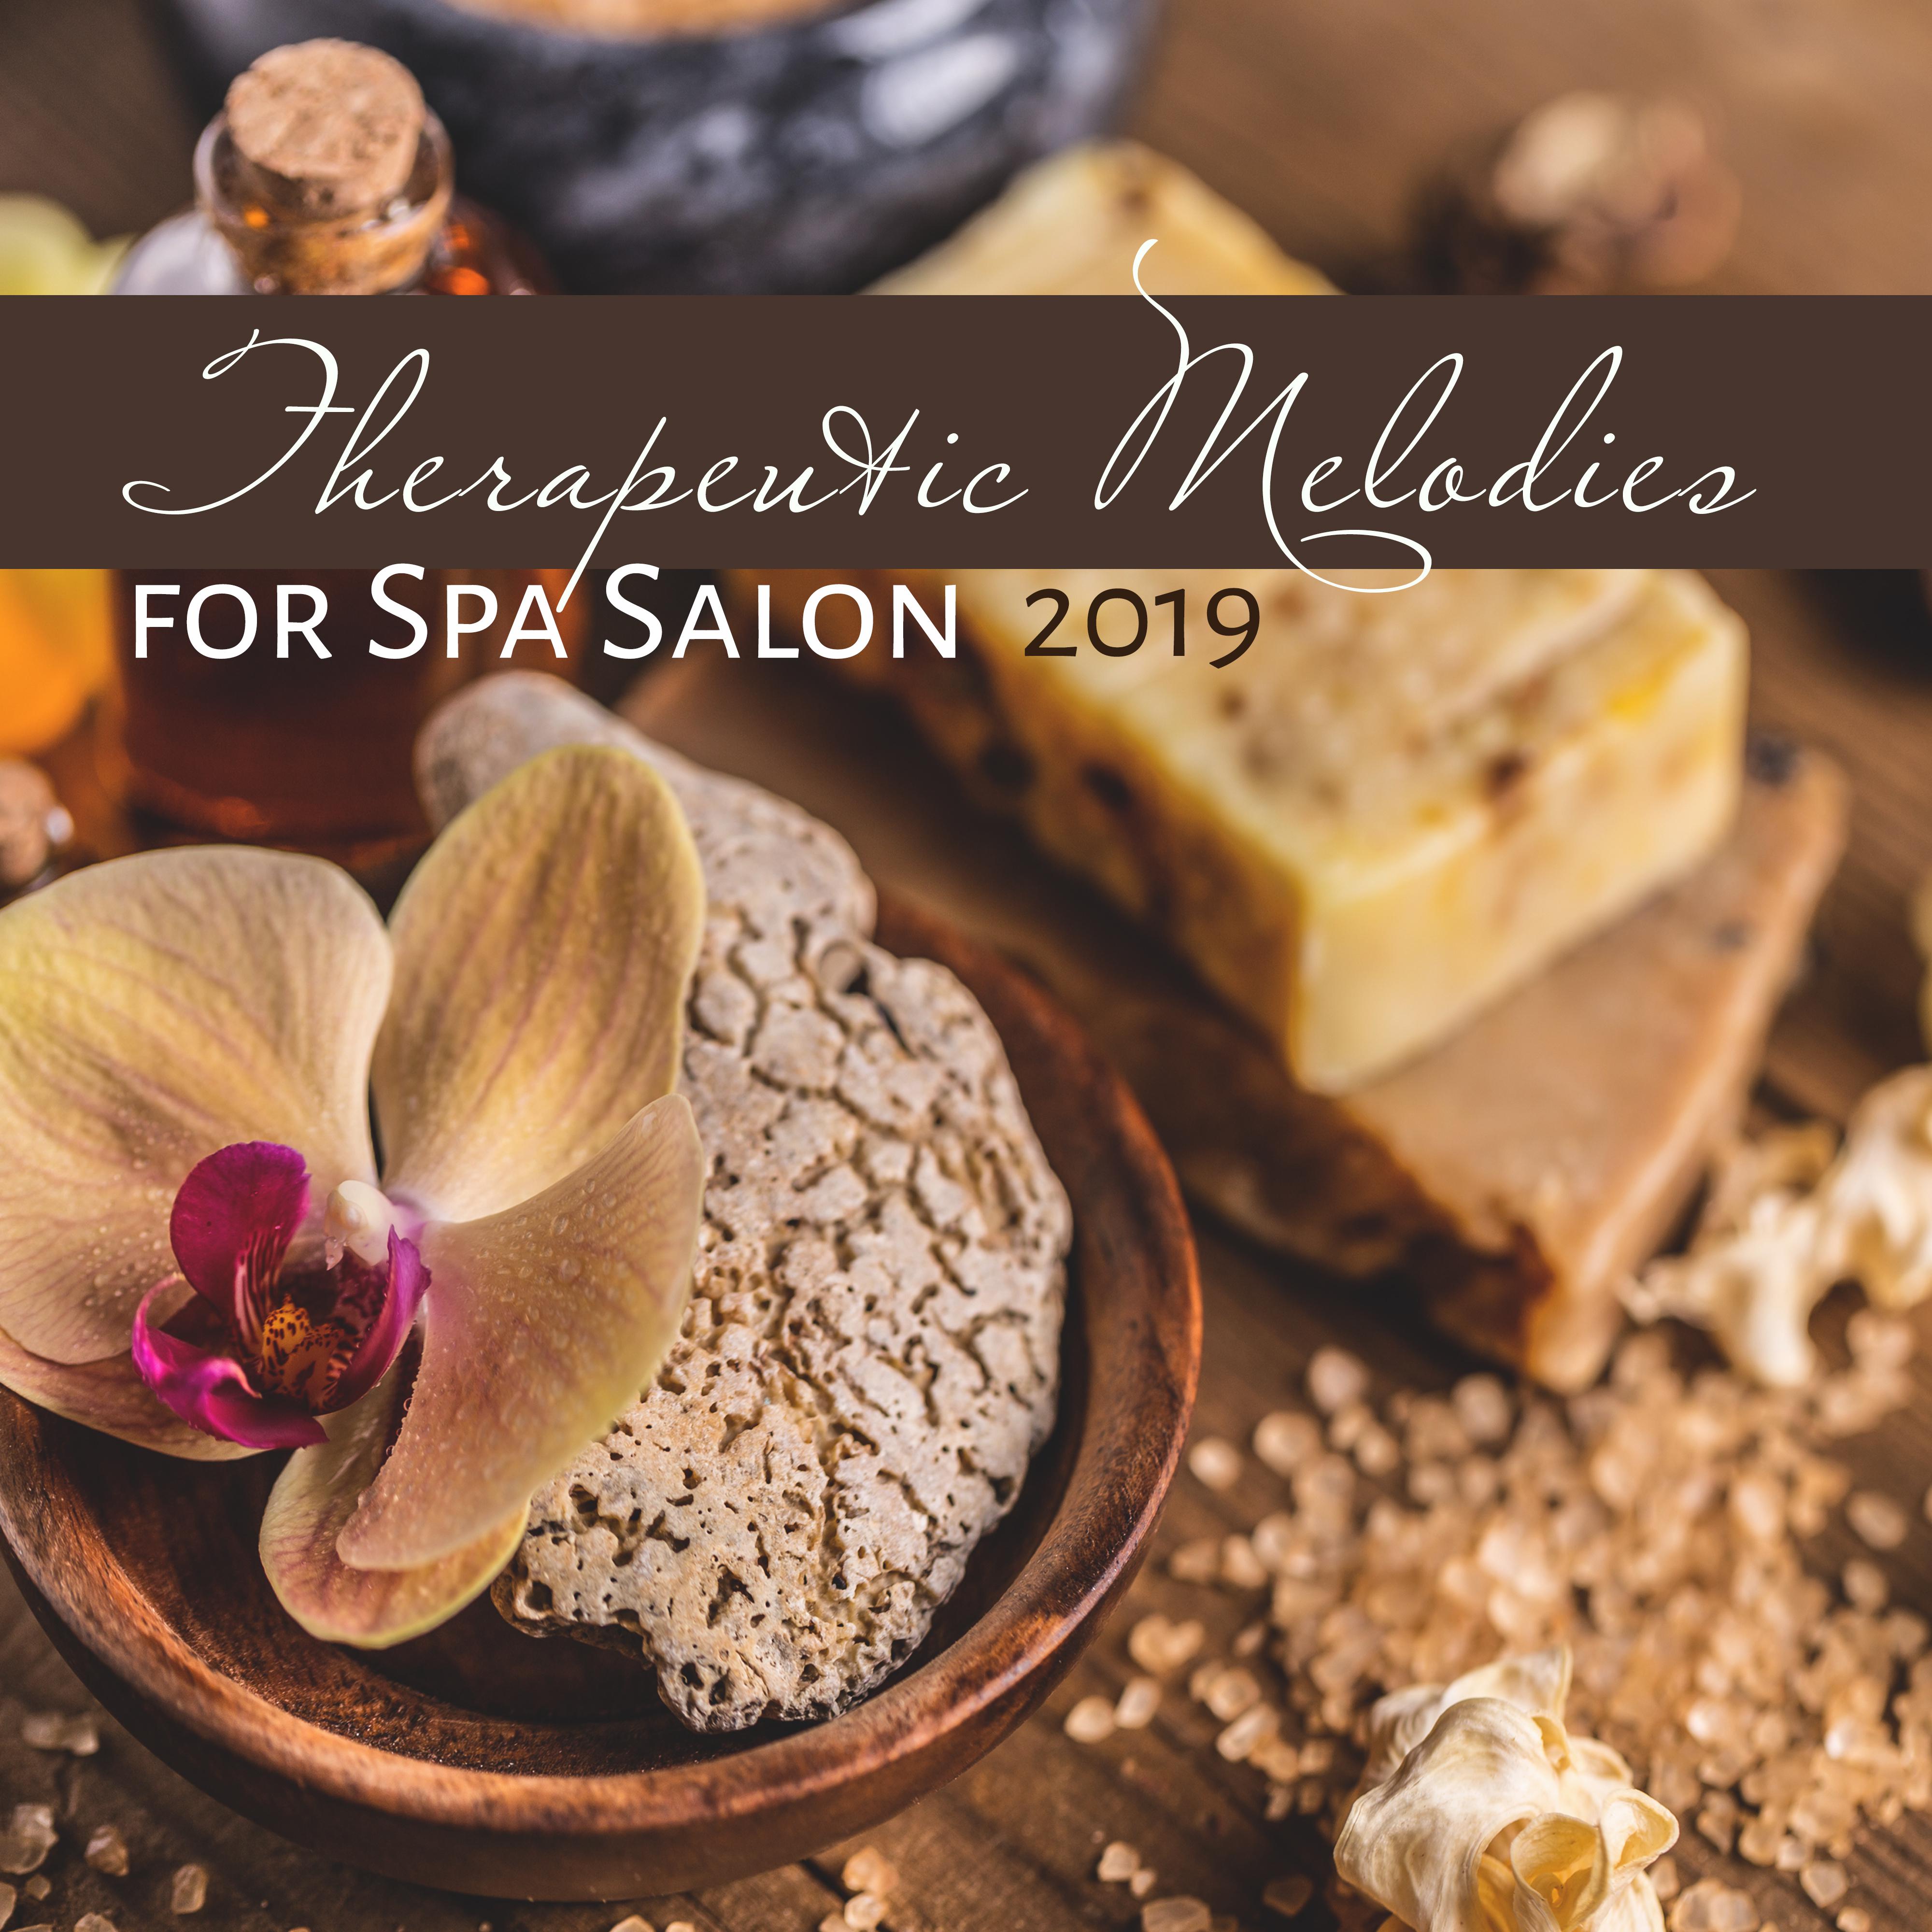 Therapeutic Melodies for Spa Salon 2019